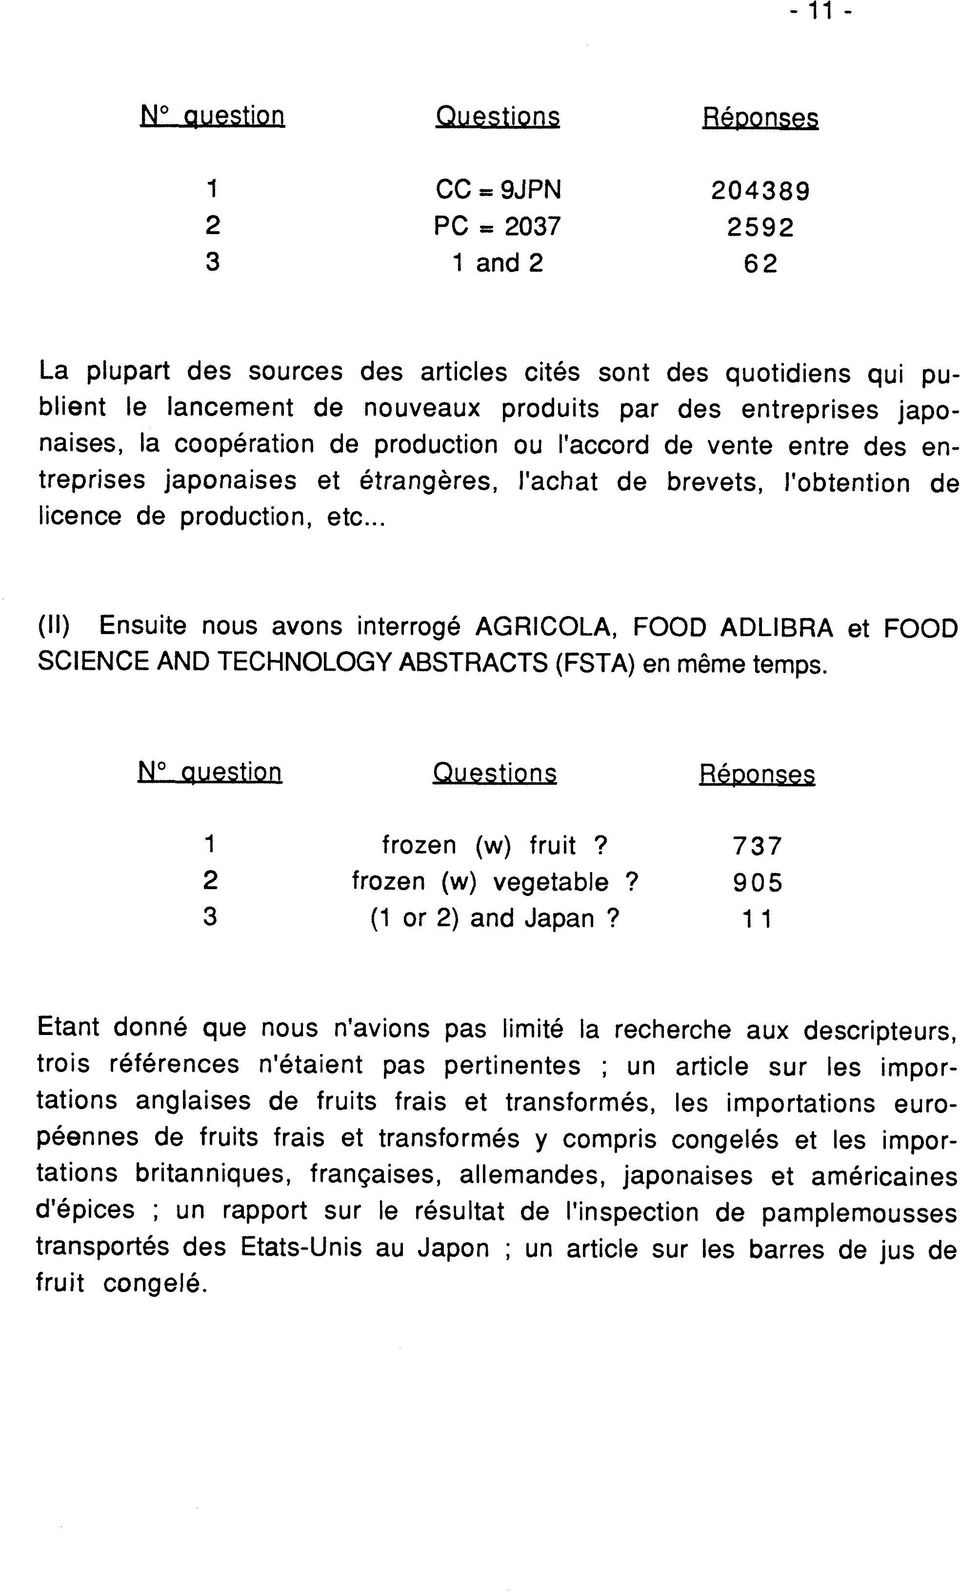 .. (II) Ensuite nous avons interroge AGRICOLA, FOOD ADLIBRA et FOOD SCIENCE AND TECHNOLOGY ABSTRACTS (FSTA) en meme temps. N questipn Questions Reponses 2 3 frozen (w) fruit? frozen (w) vegetable?